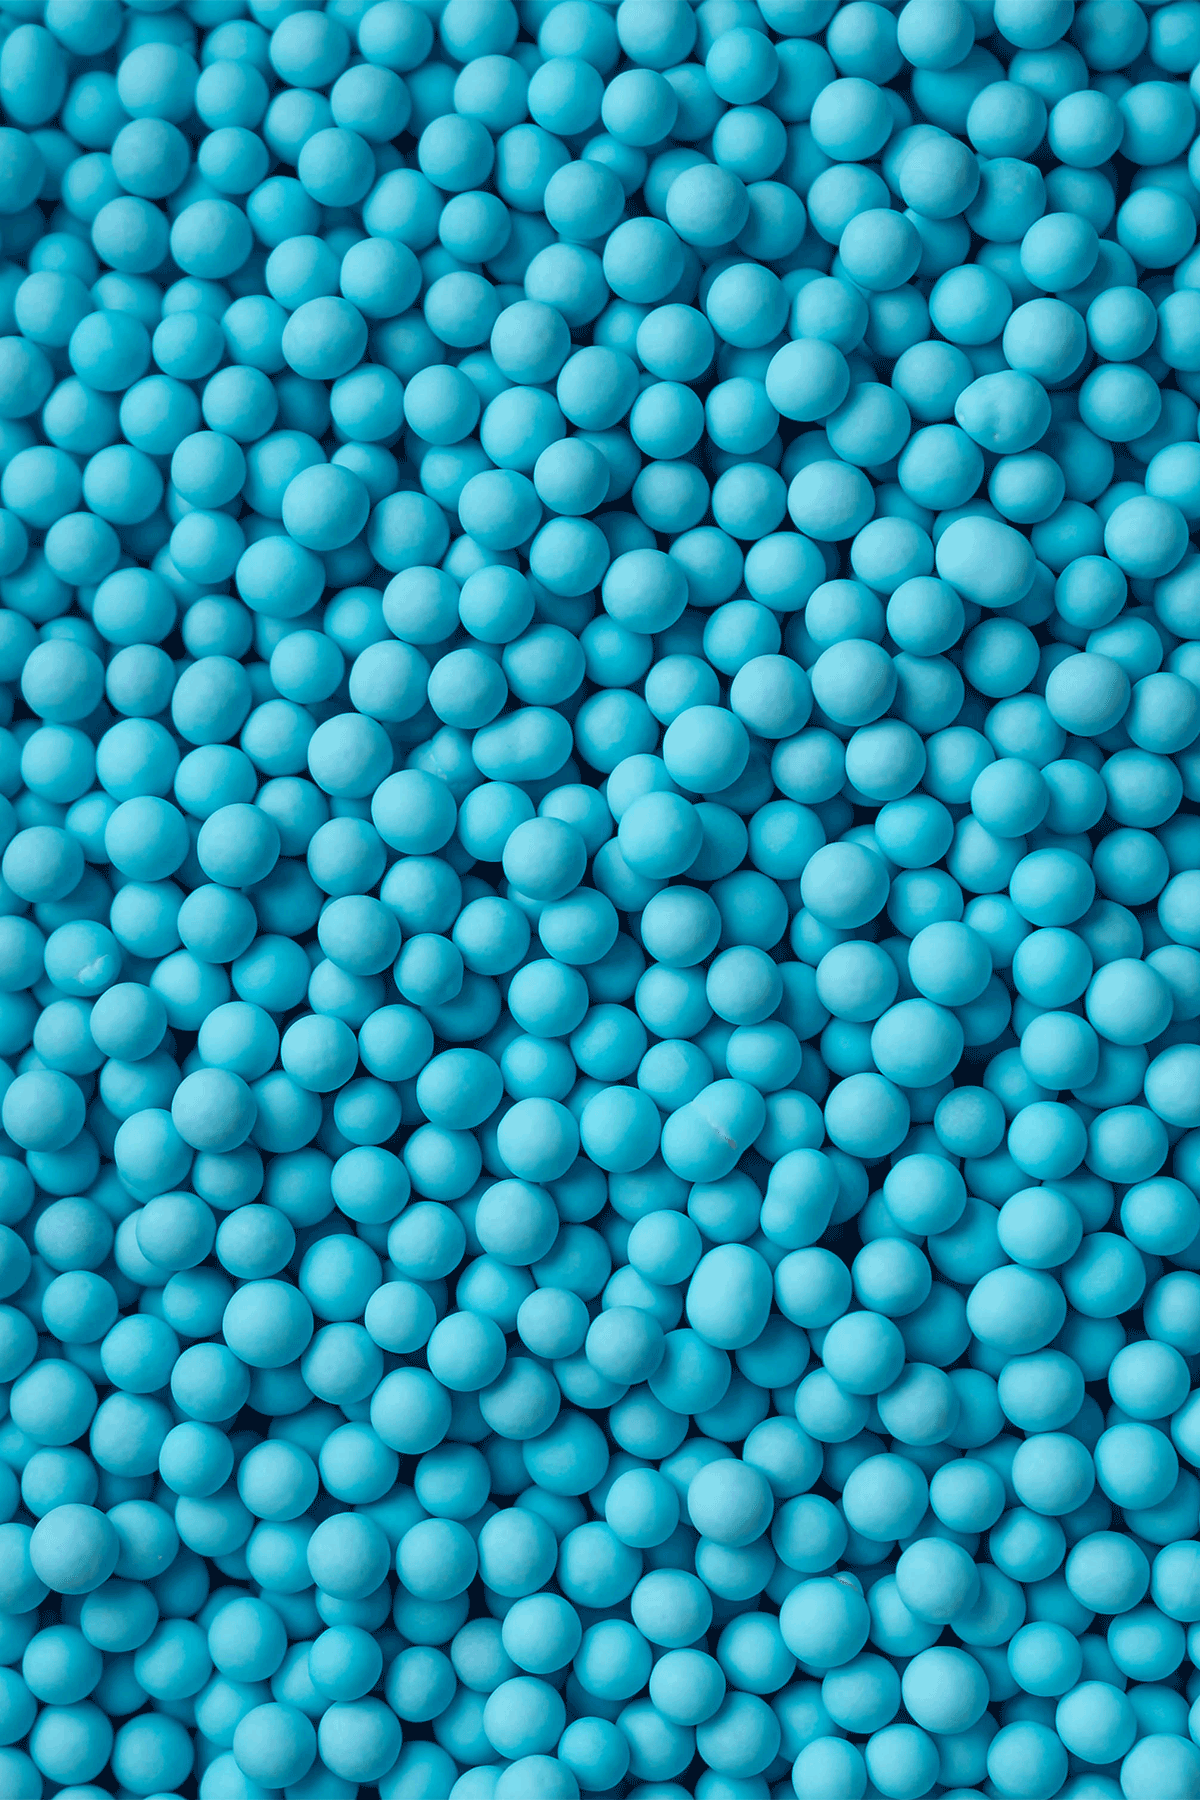 Matt Chocolate Balls - Blue - (Small/6mm) Sprinkles Sprinkly